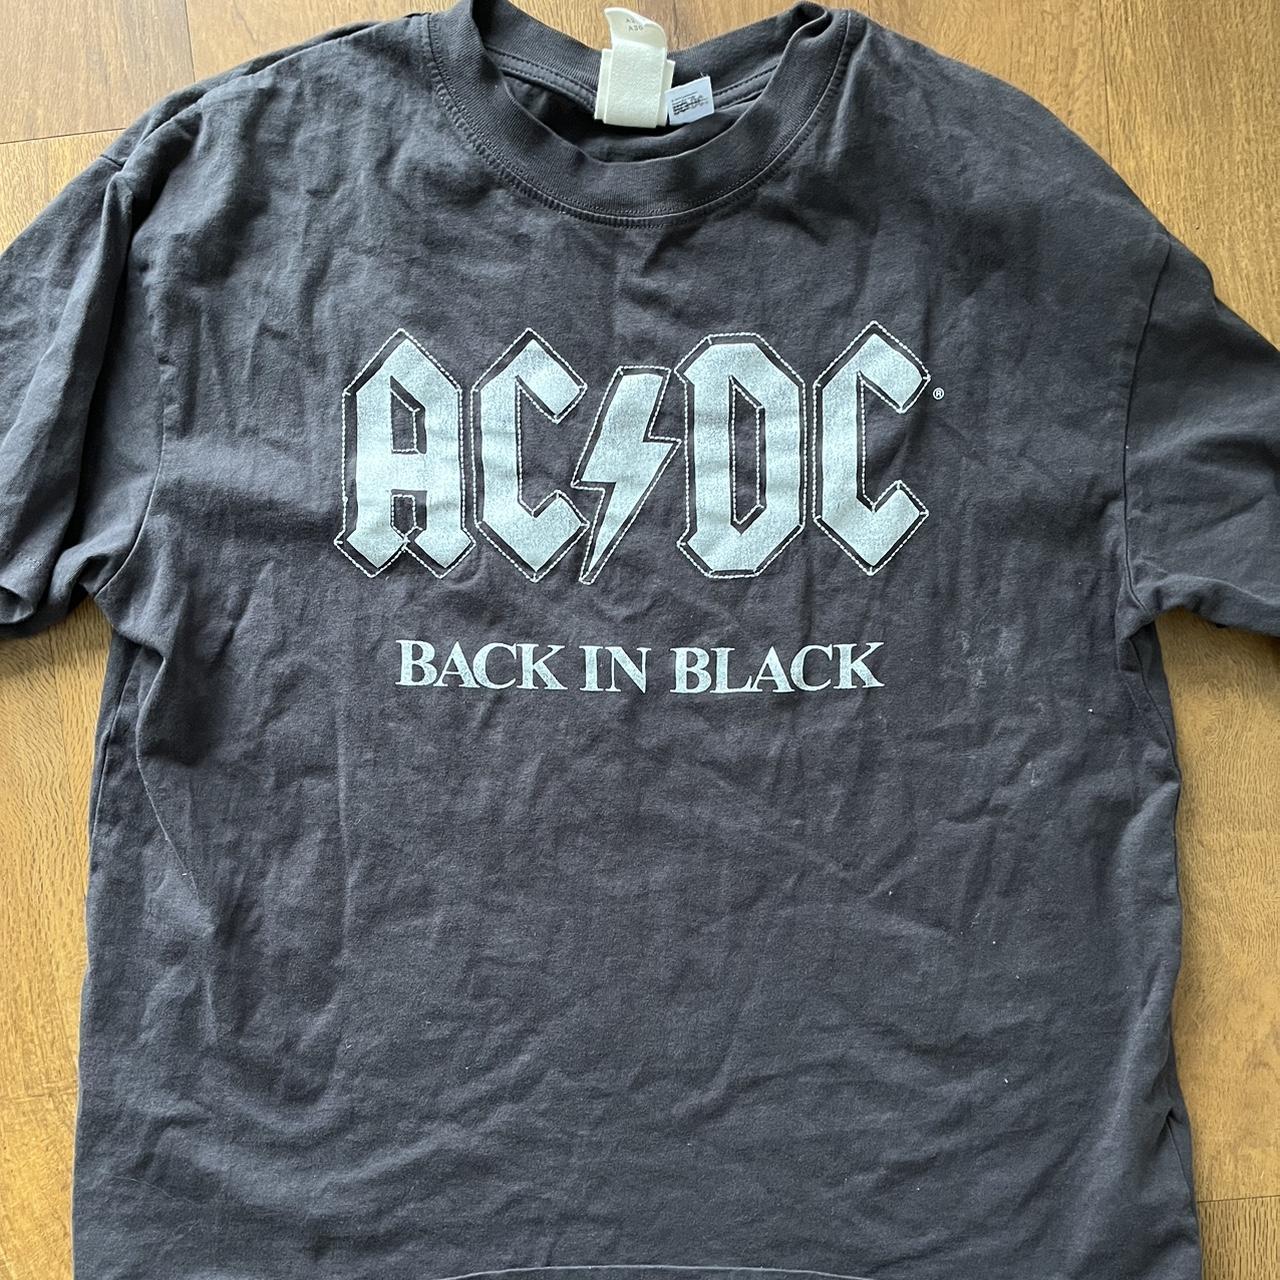 Vintage Band Tee 2004 AC/DC Lightning Strike Concert Shirt Triple